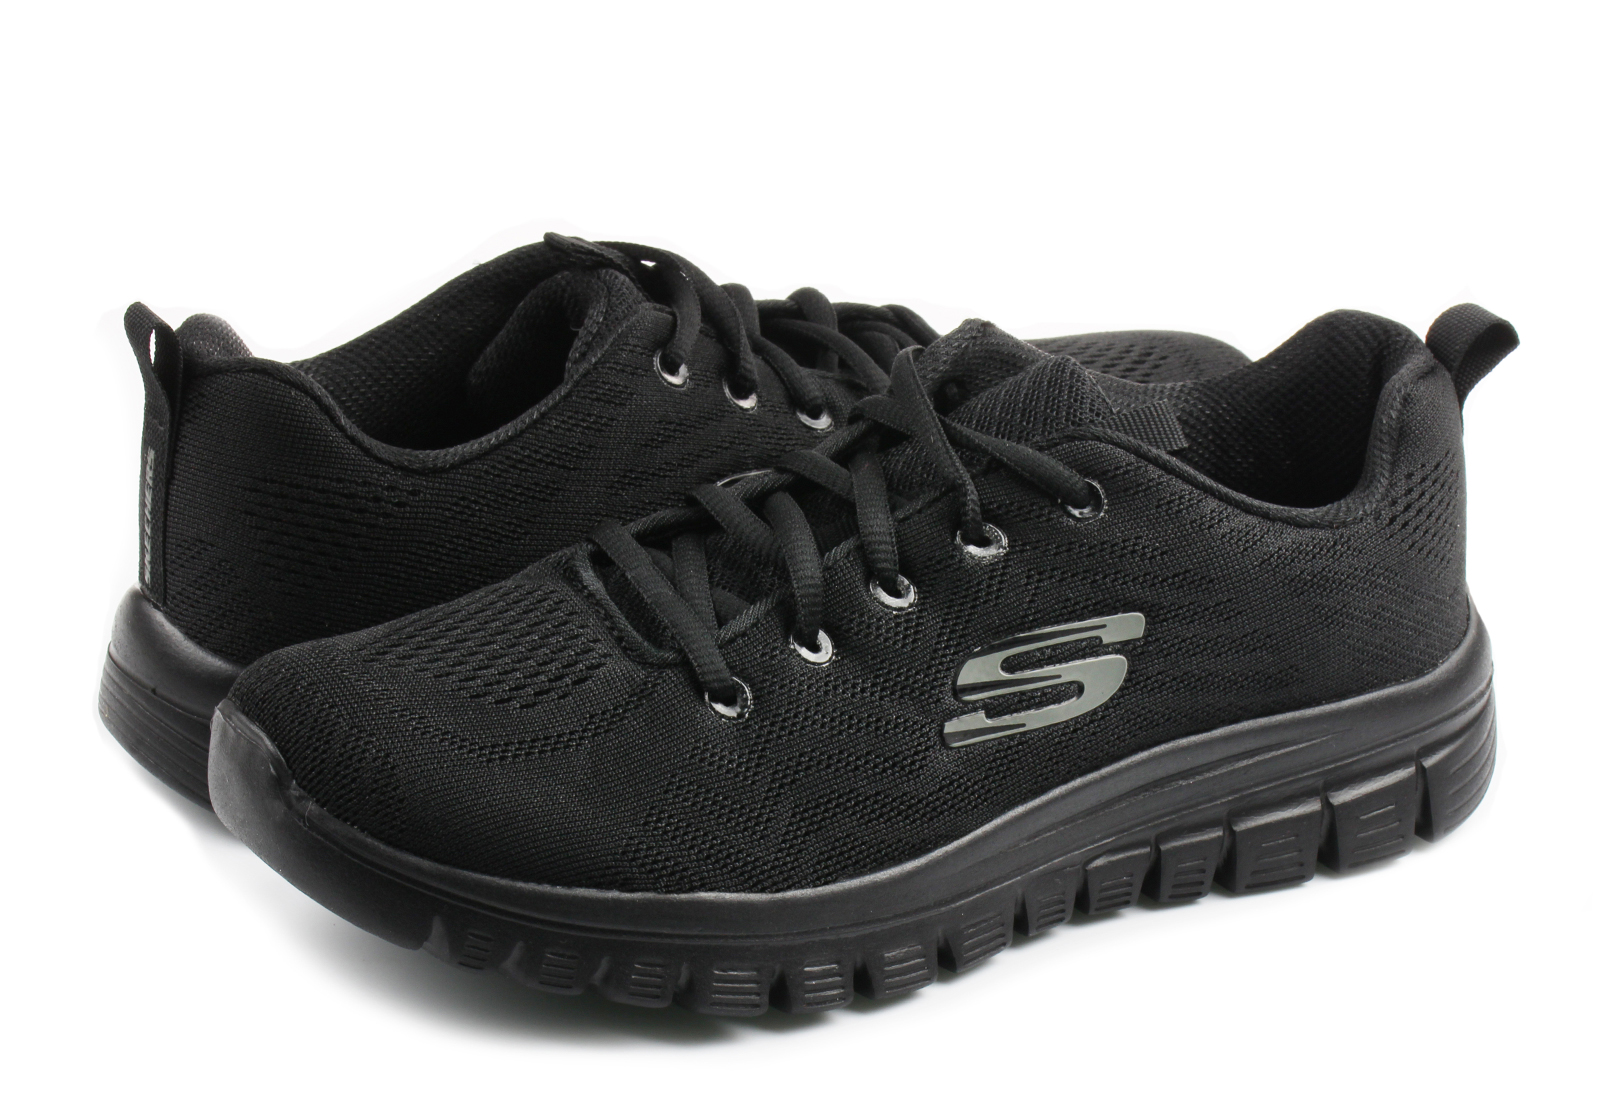 Skechers Shoes - Graceful - Get Connected - 12615-bbk - Online shop for sneakers ...